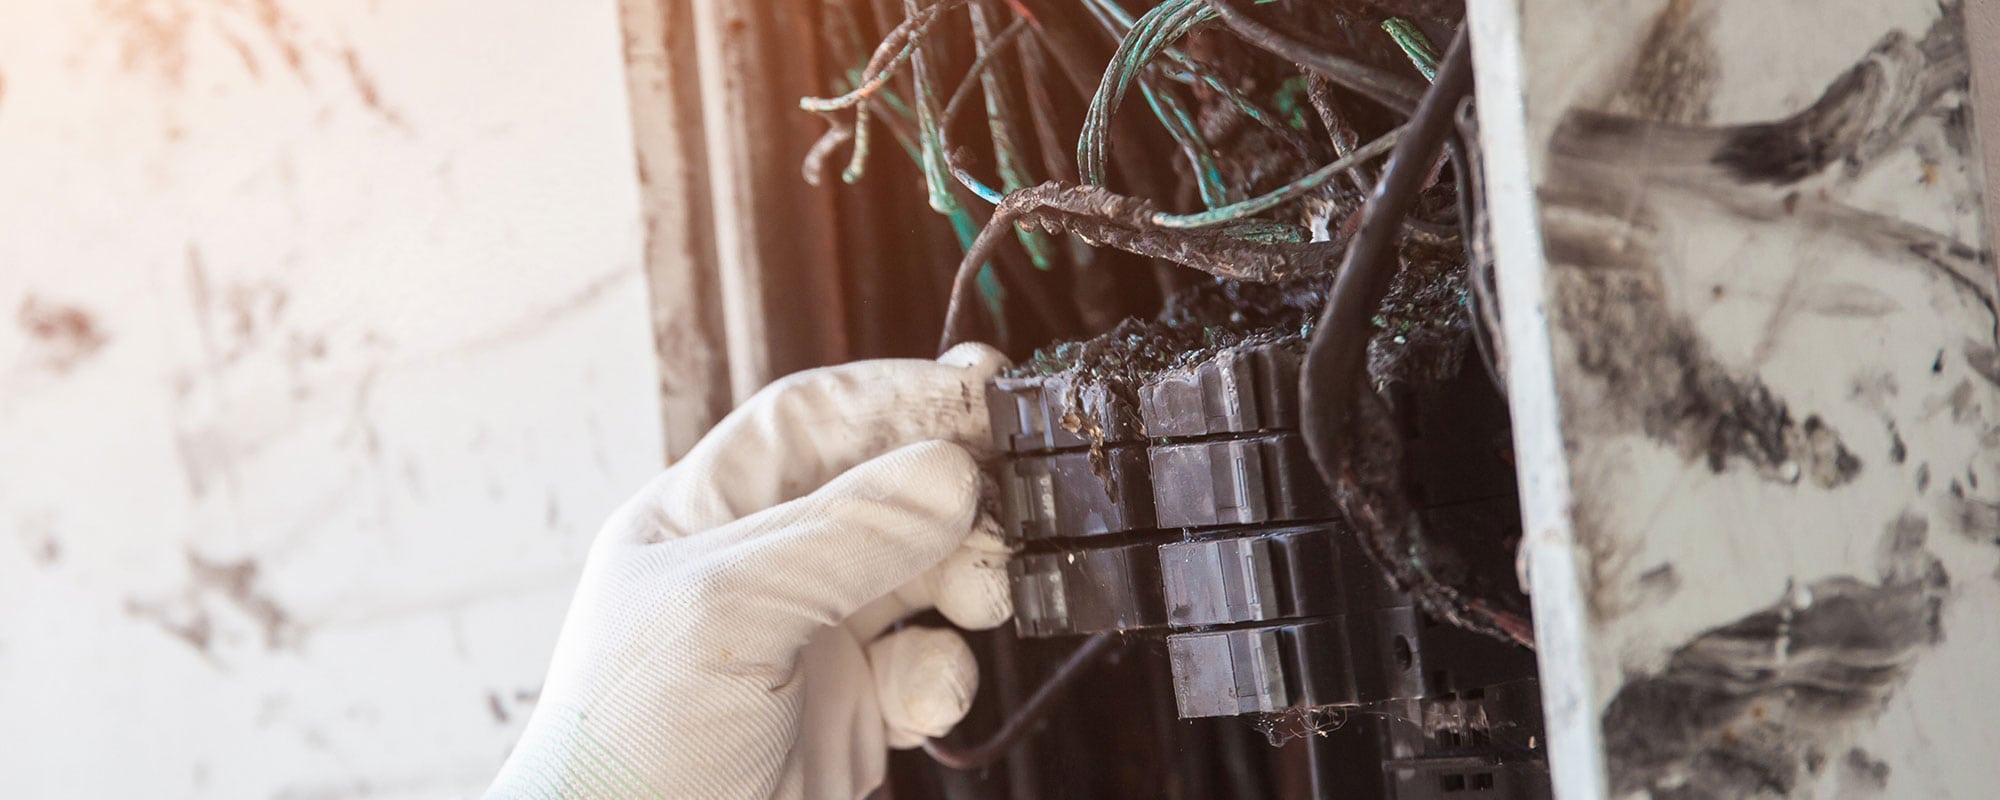 viper electrical services auckland new zealand hazard blog